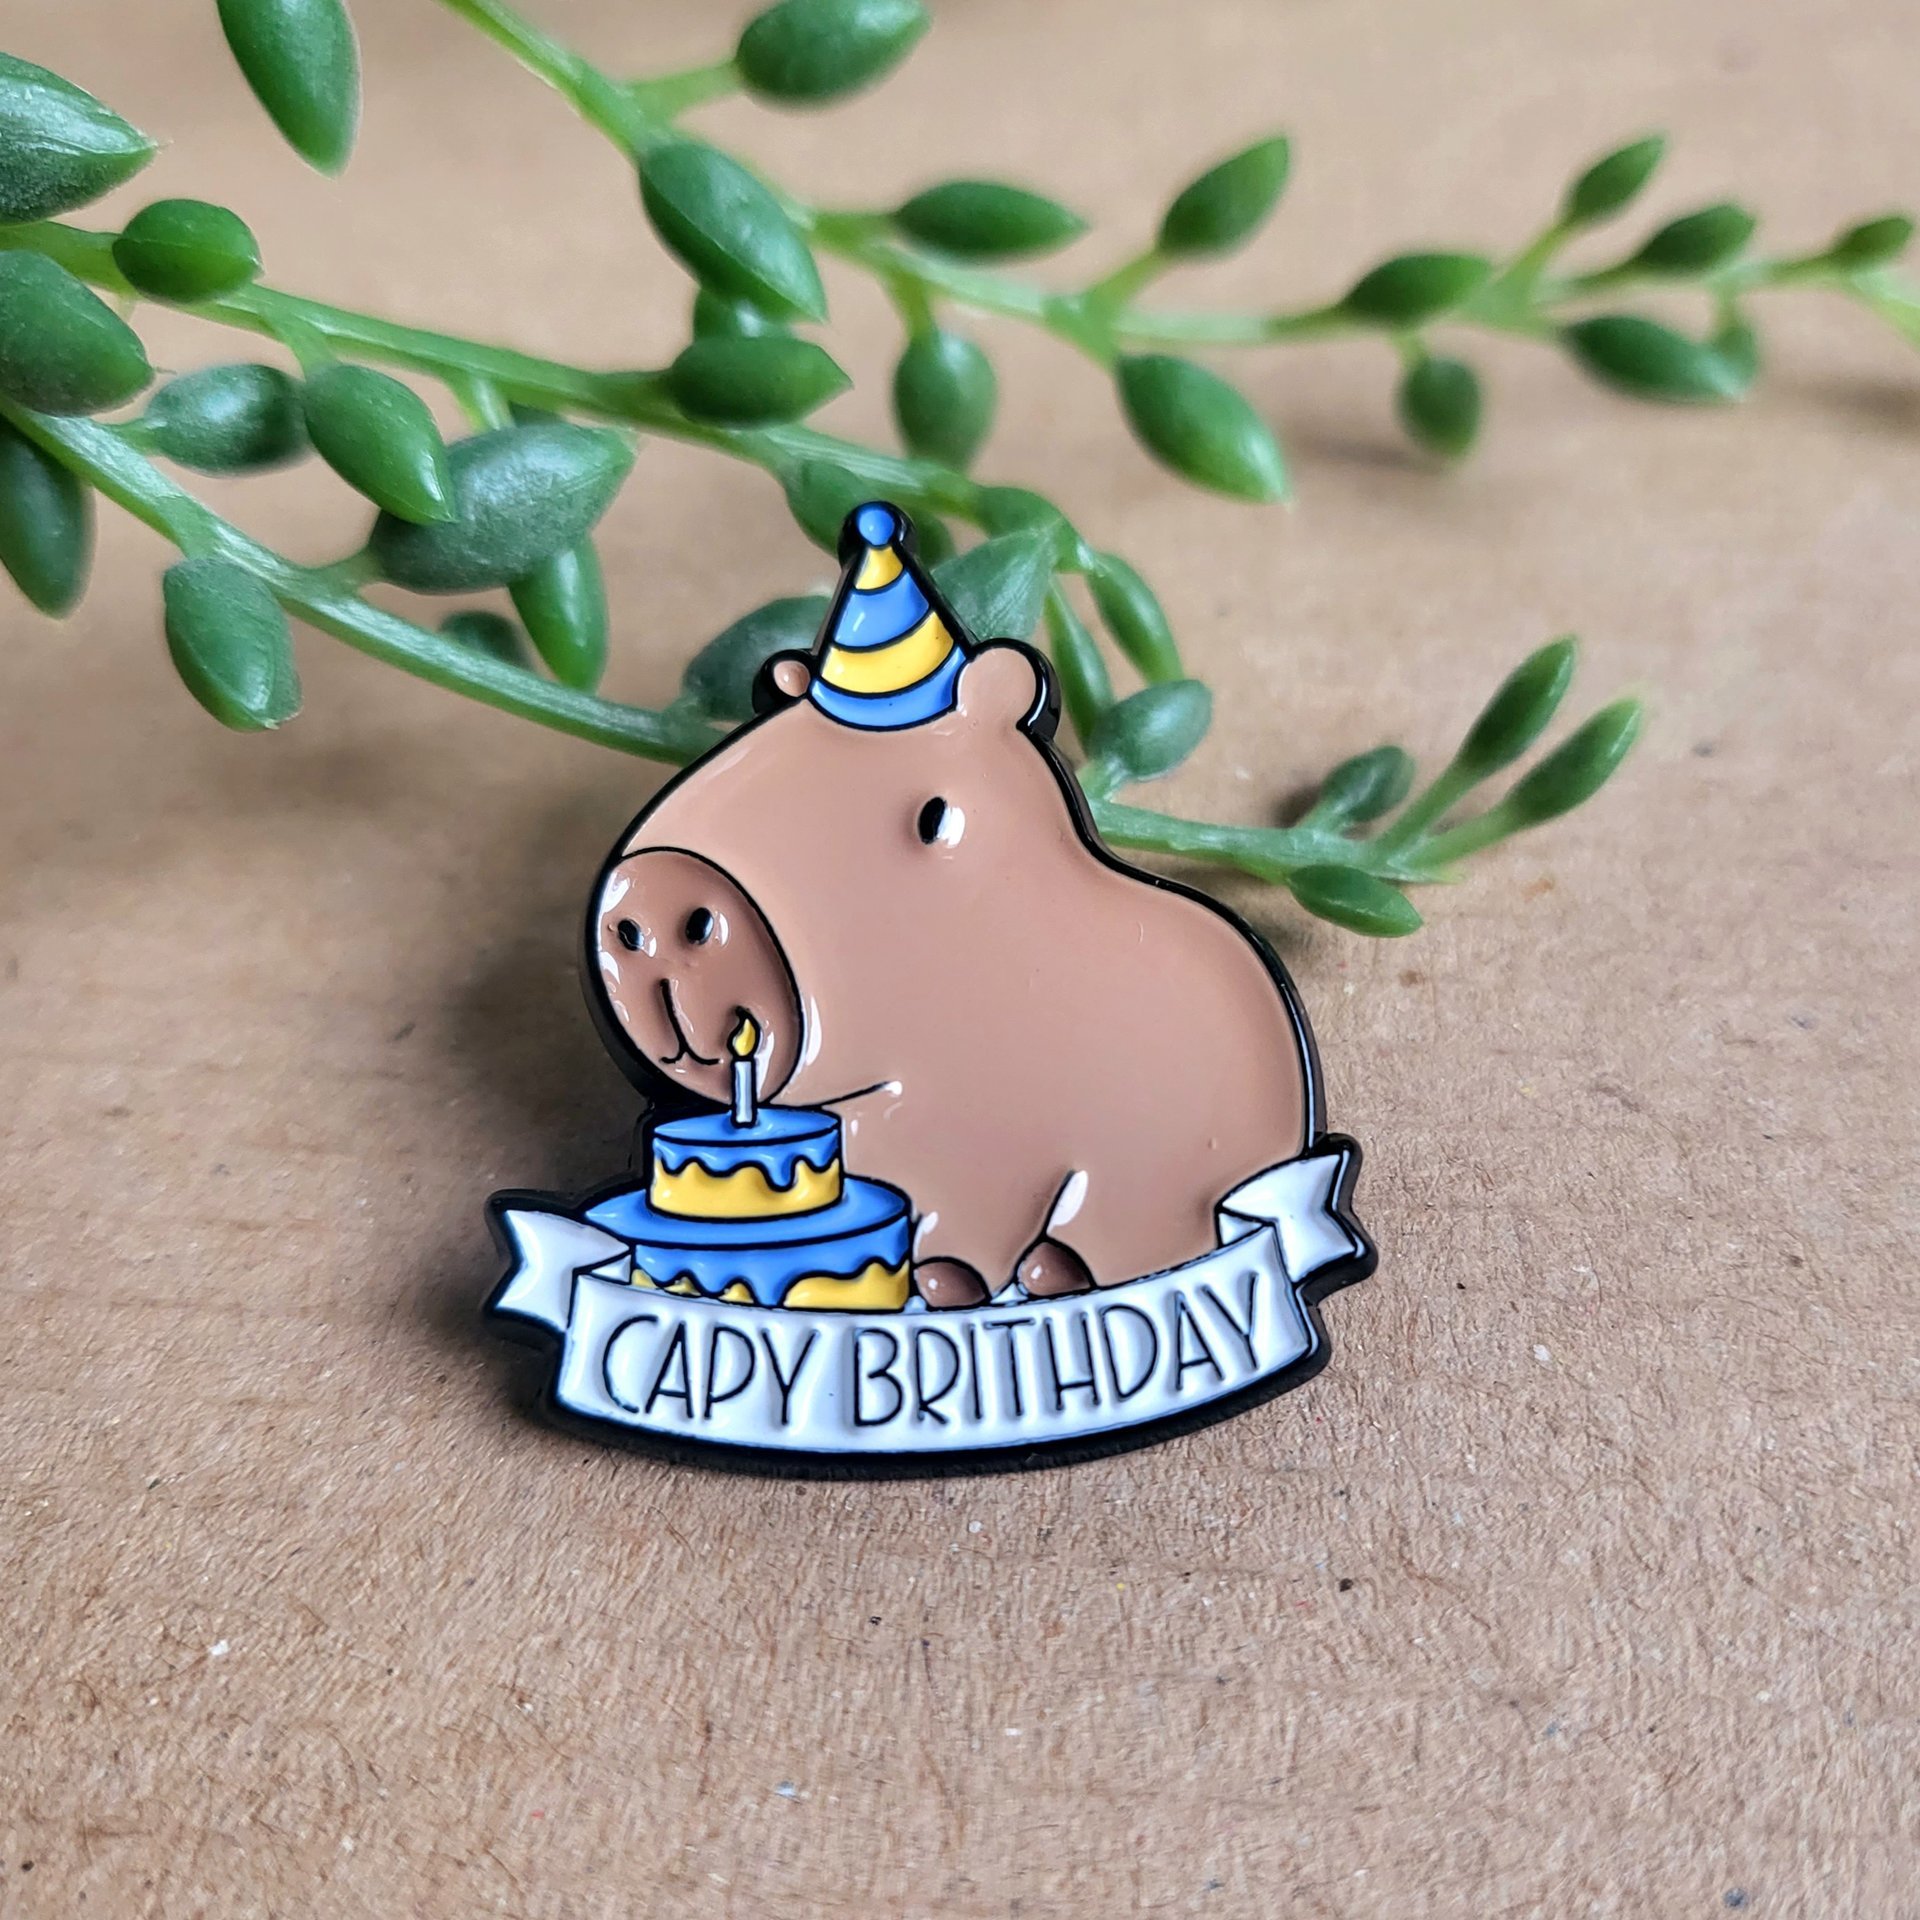 Funny Capybara Birthday Pin badge